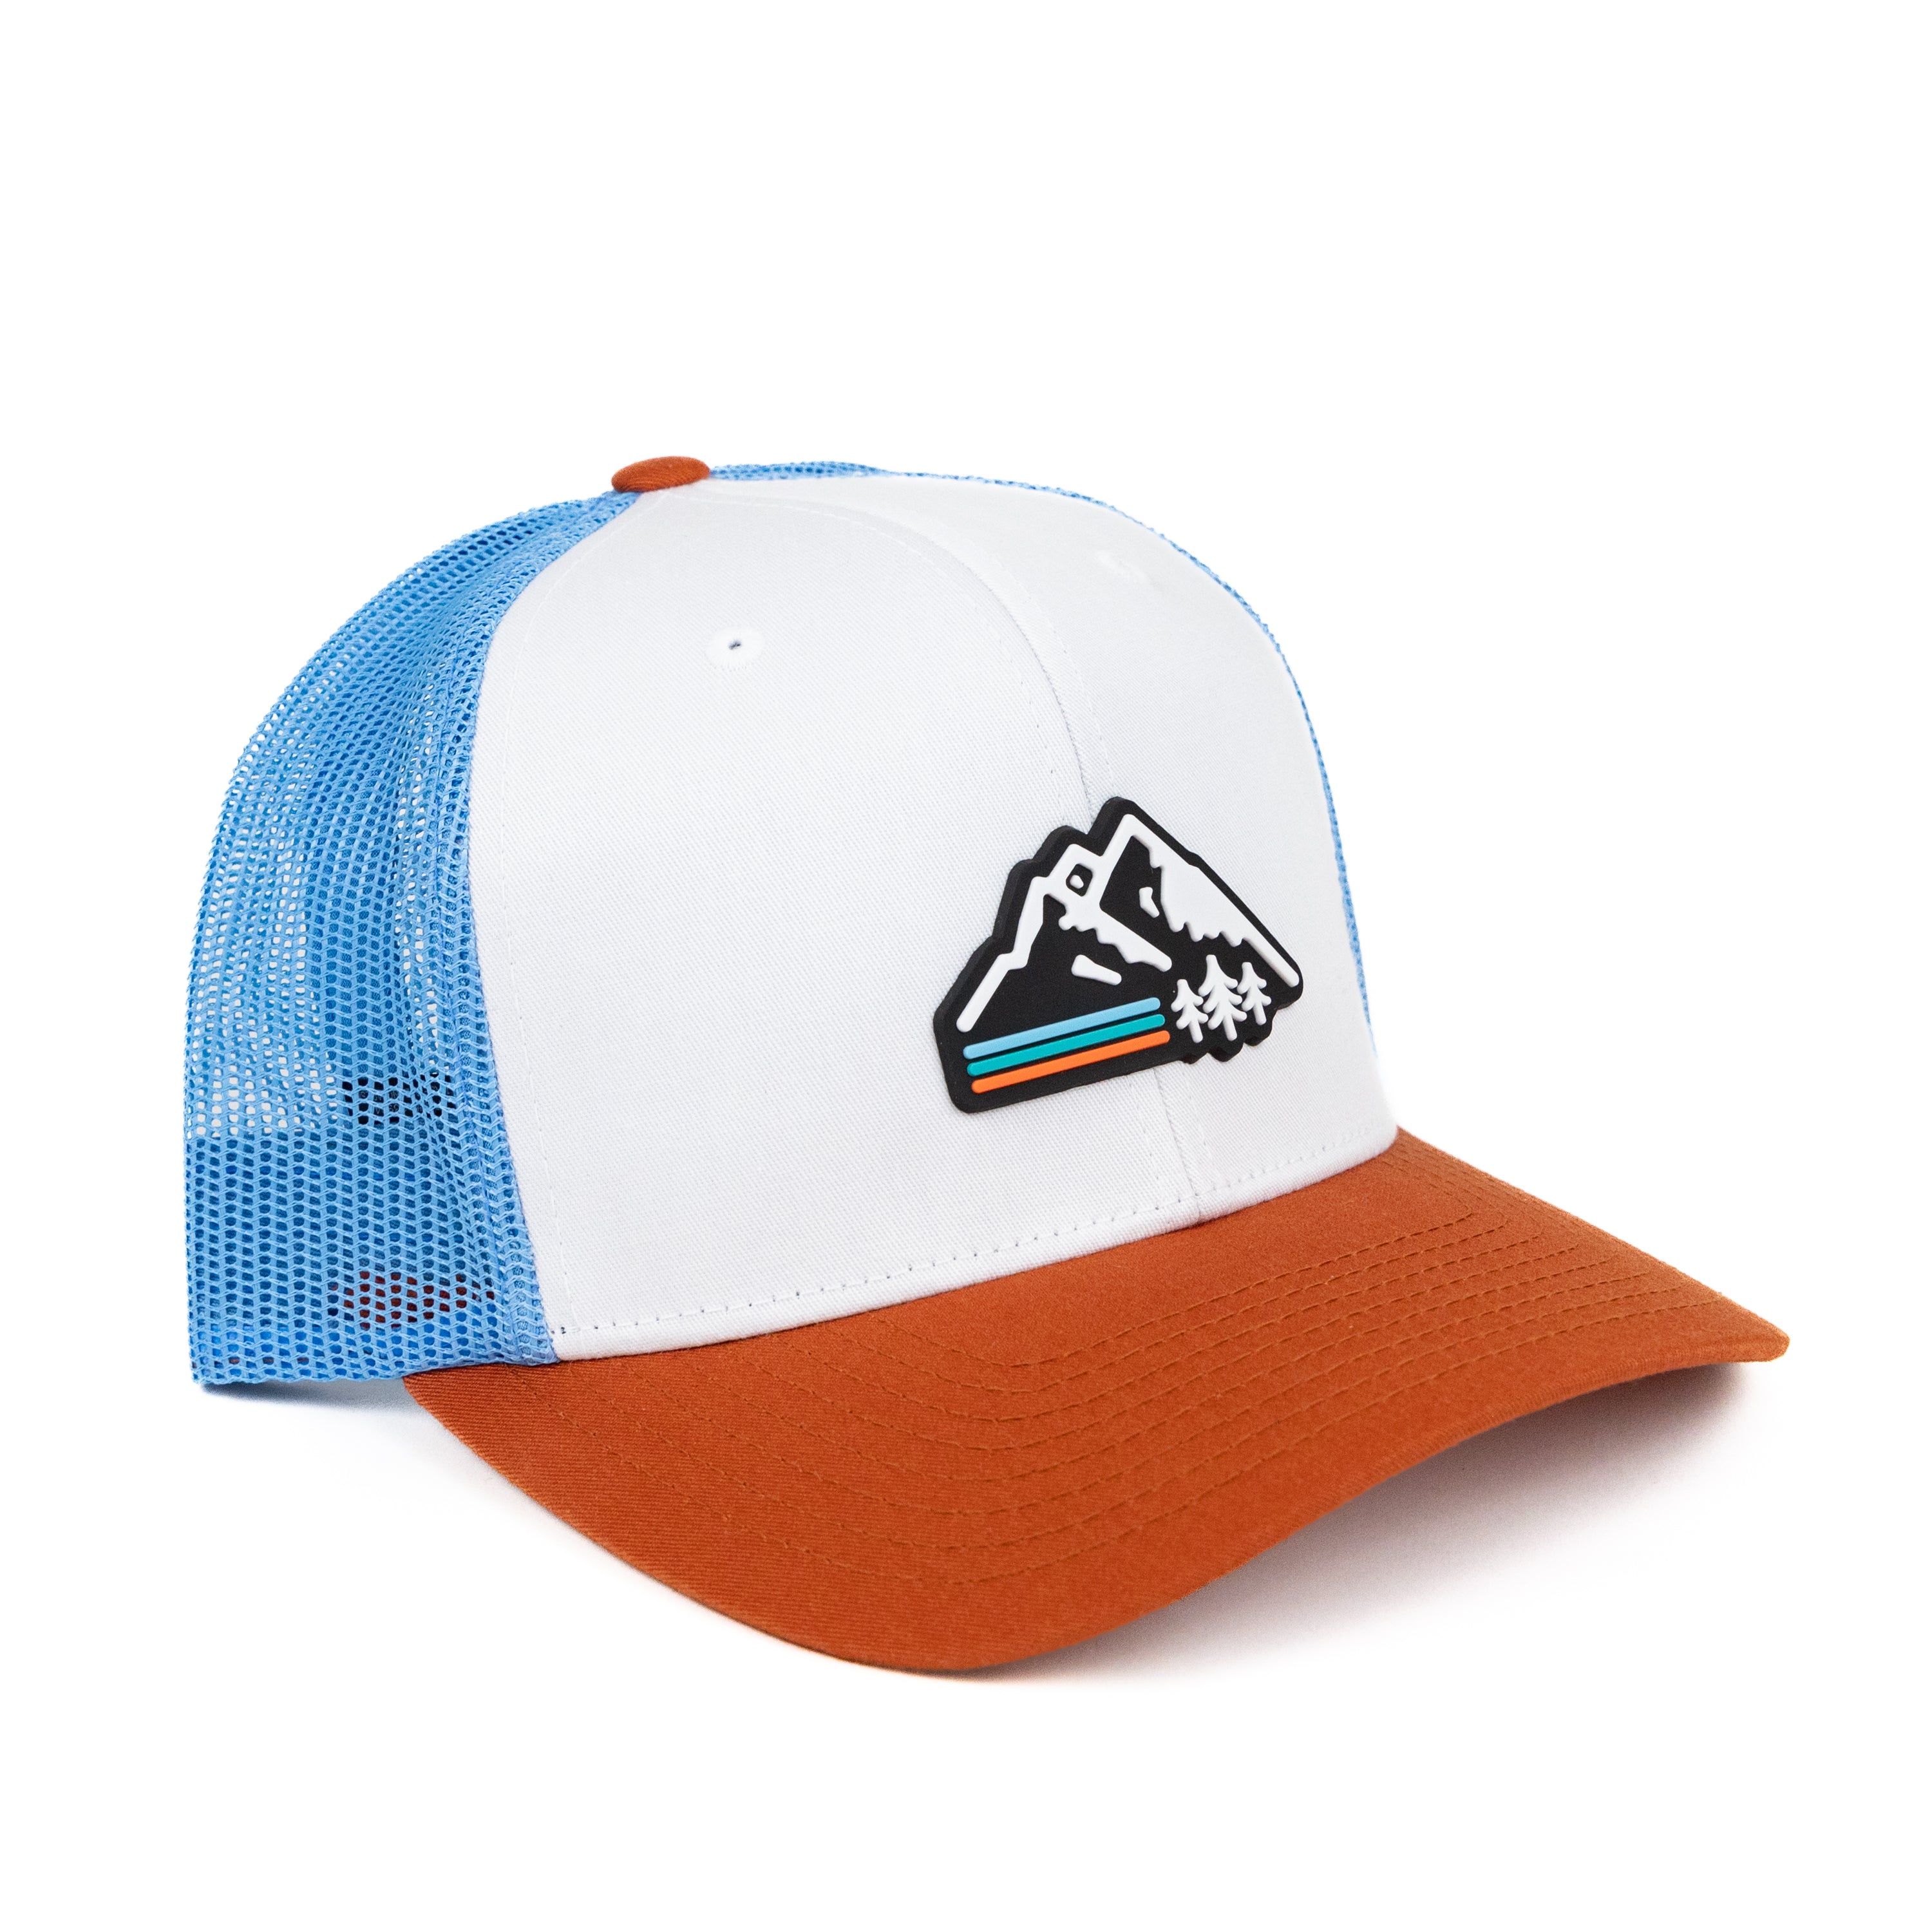 Retro Mountain Trucker Hat - TriPine White/ White